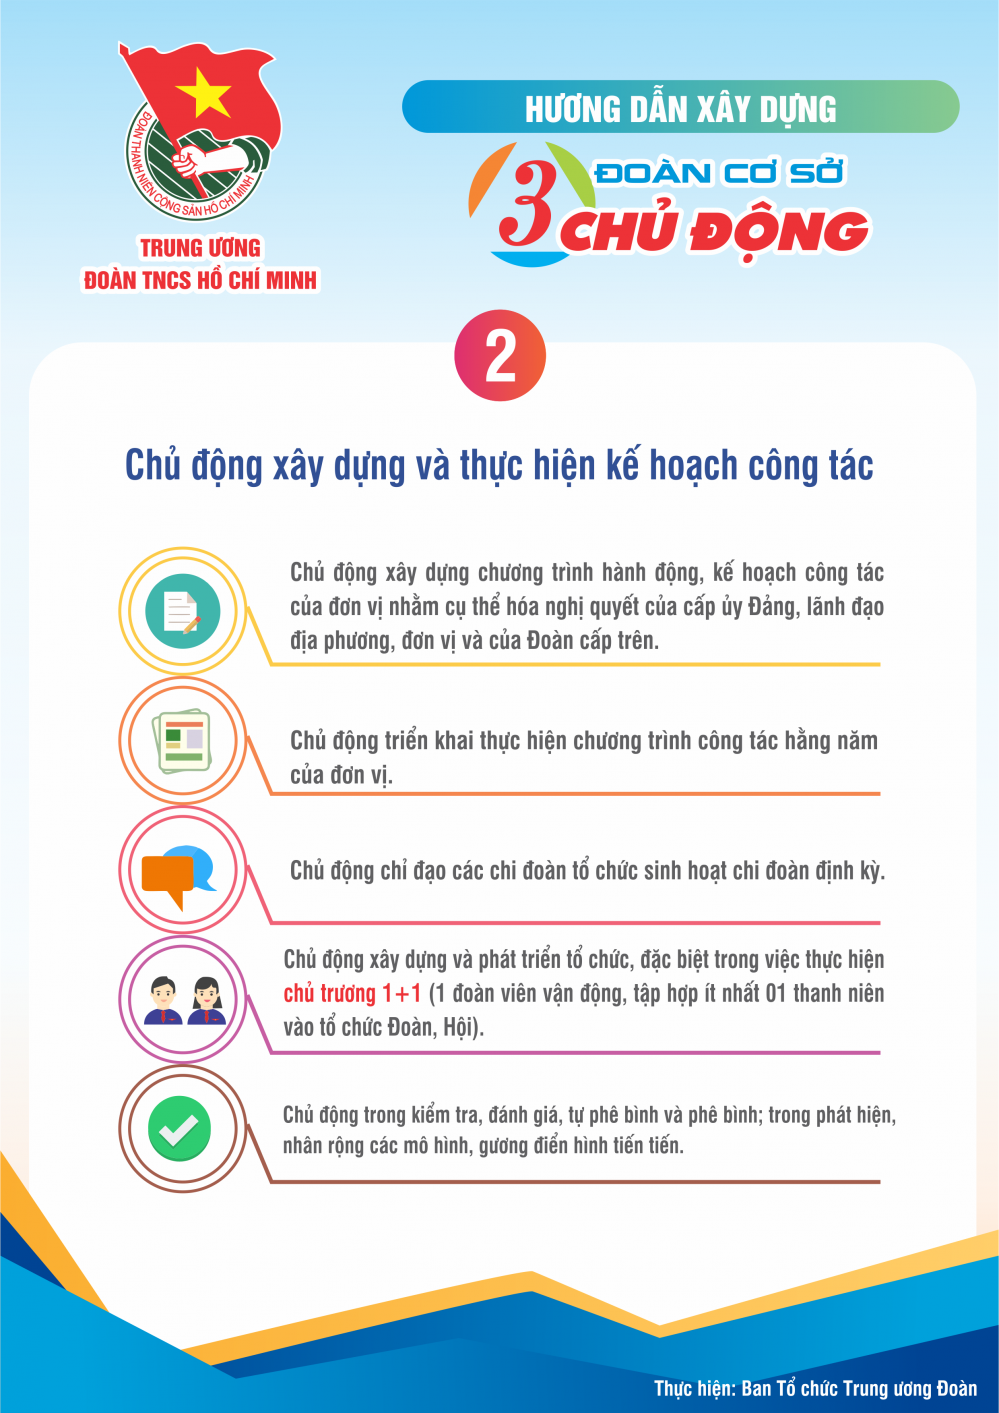 INFO 3 CHU DONG 3